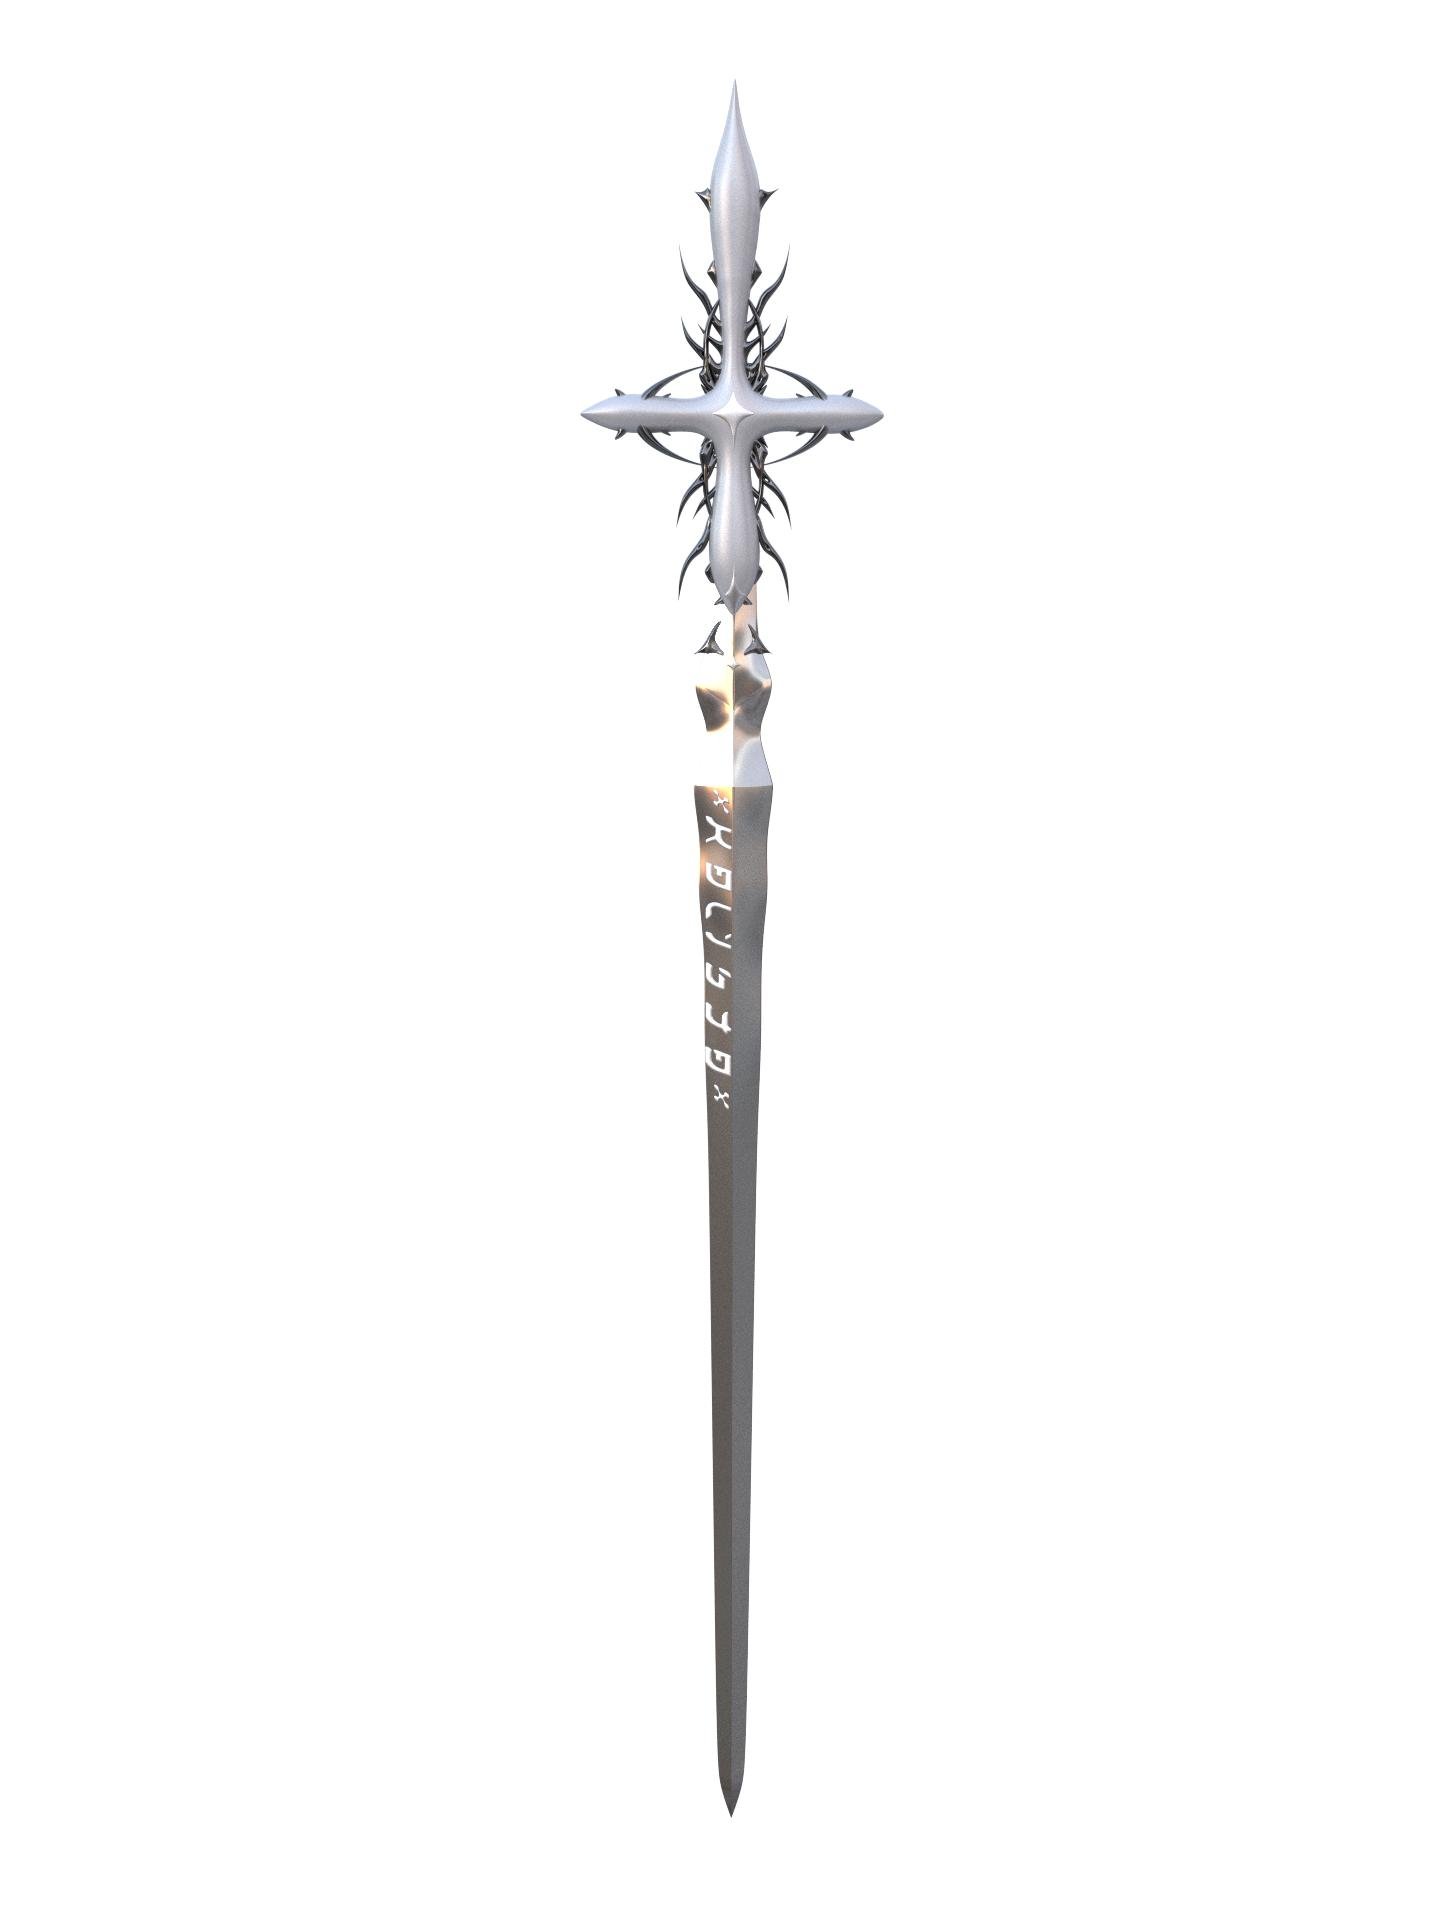 Nebrith Sword by KALISTA